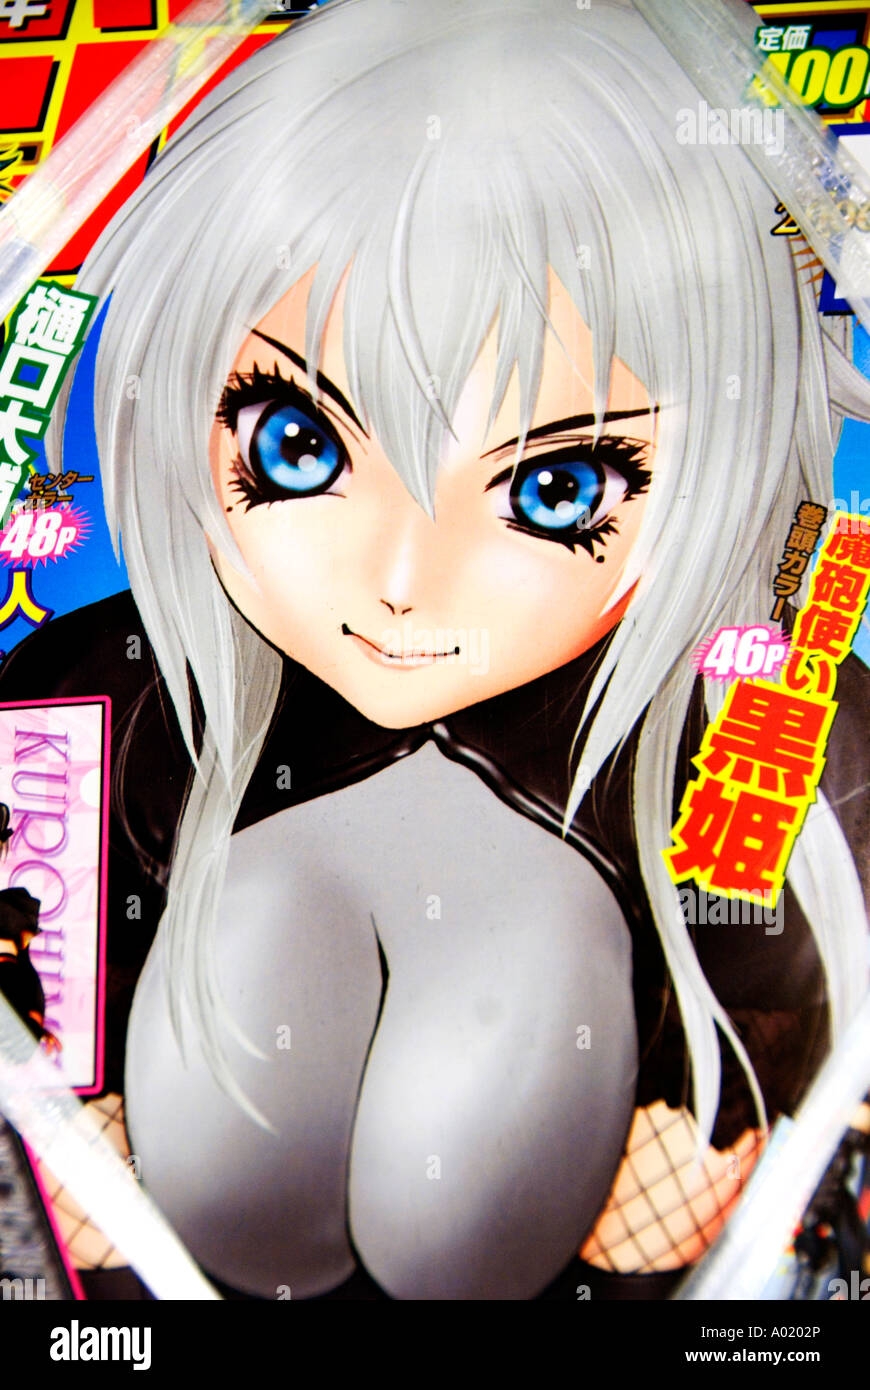 Cover artwork del manga giapponese comic book in Giappone Foto Stock